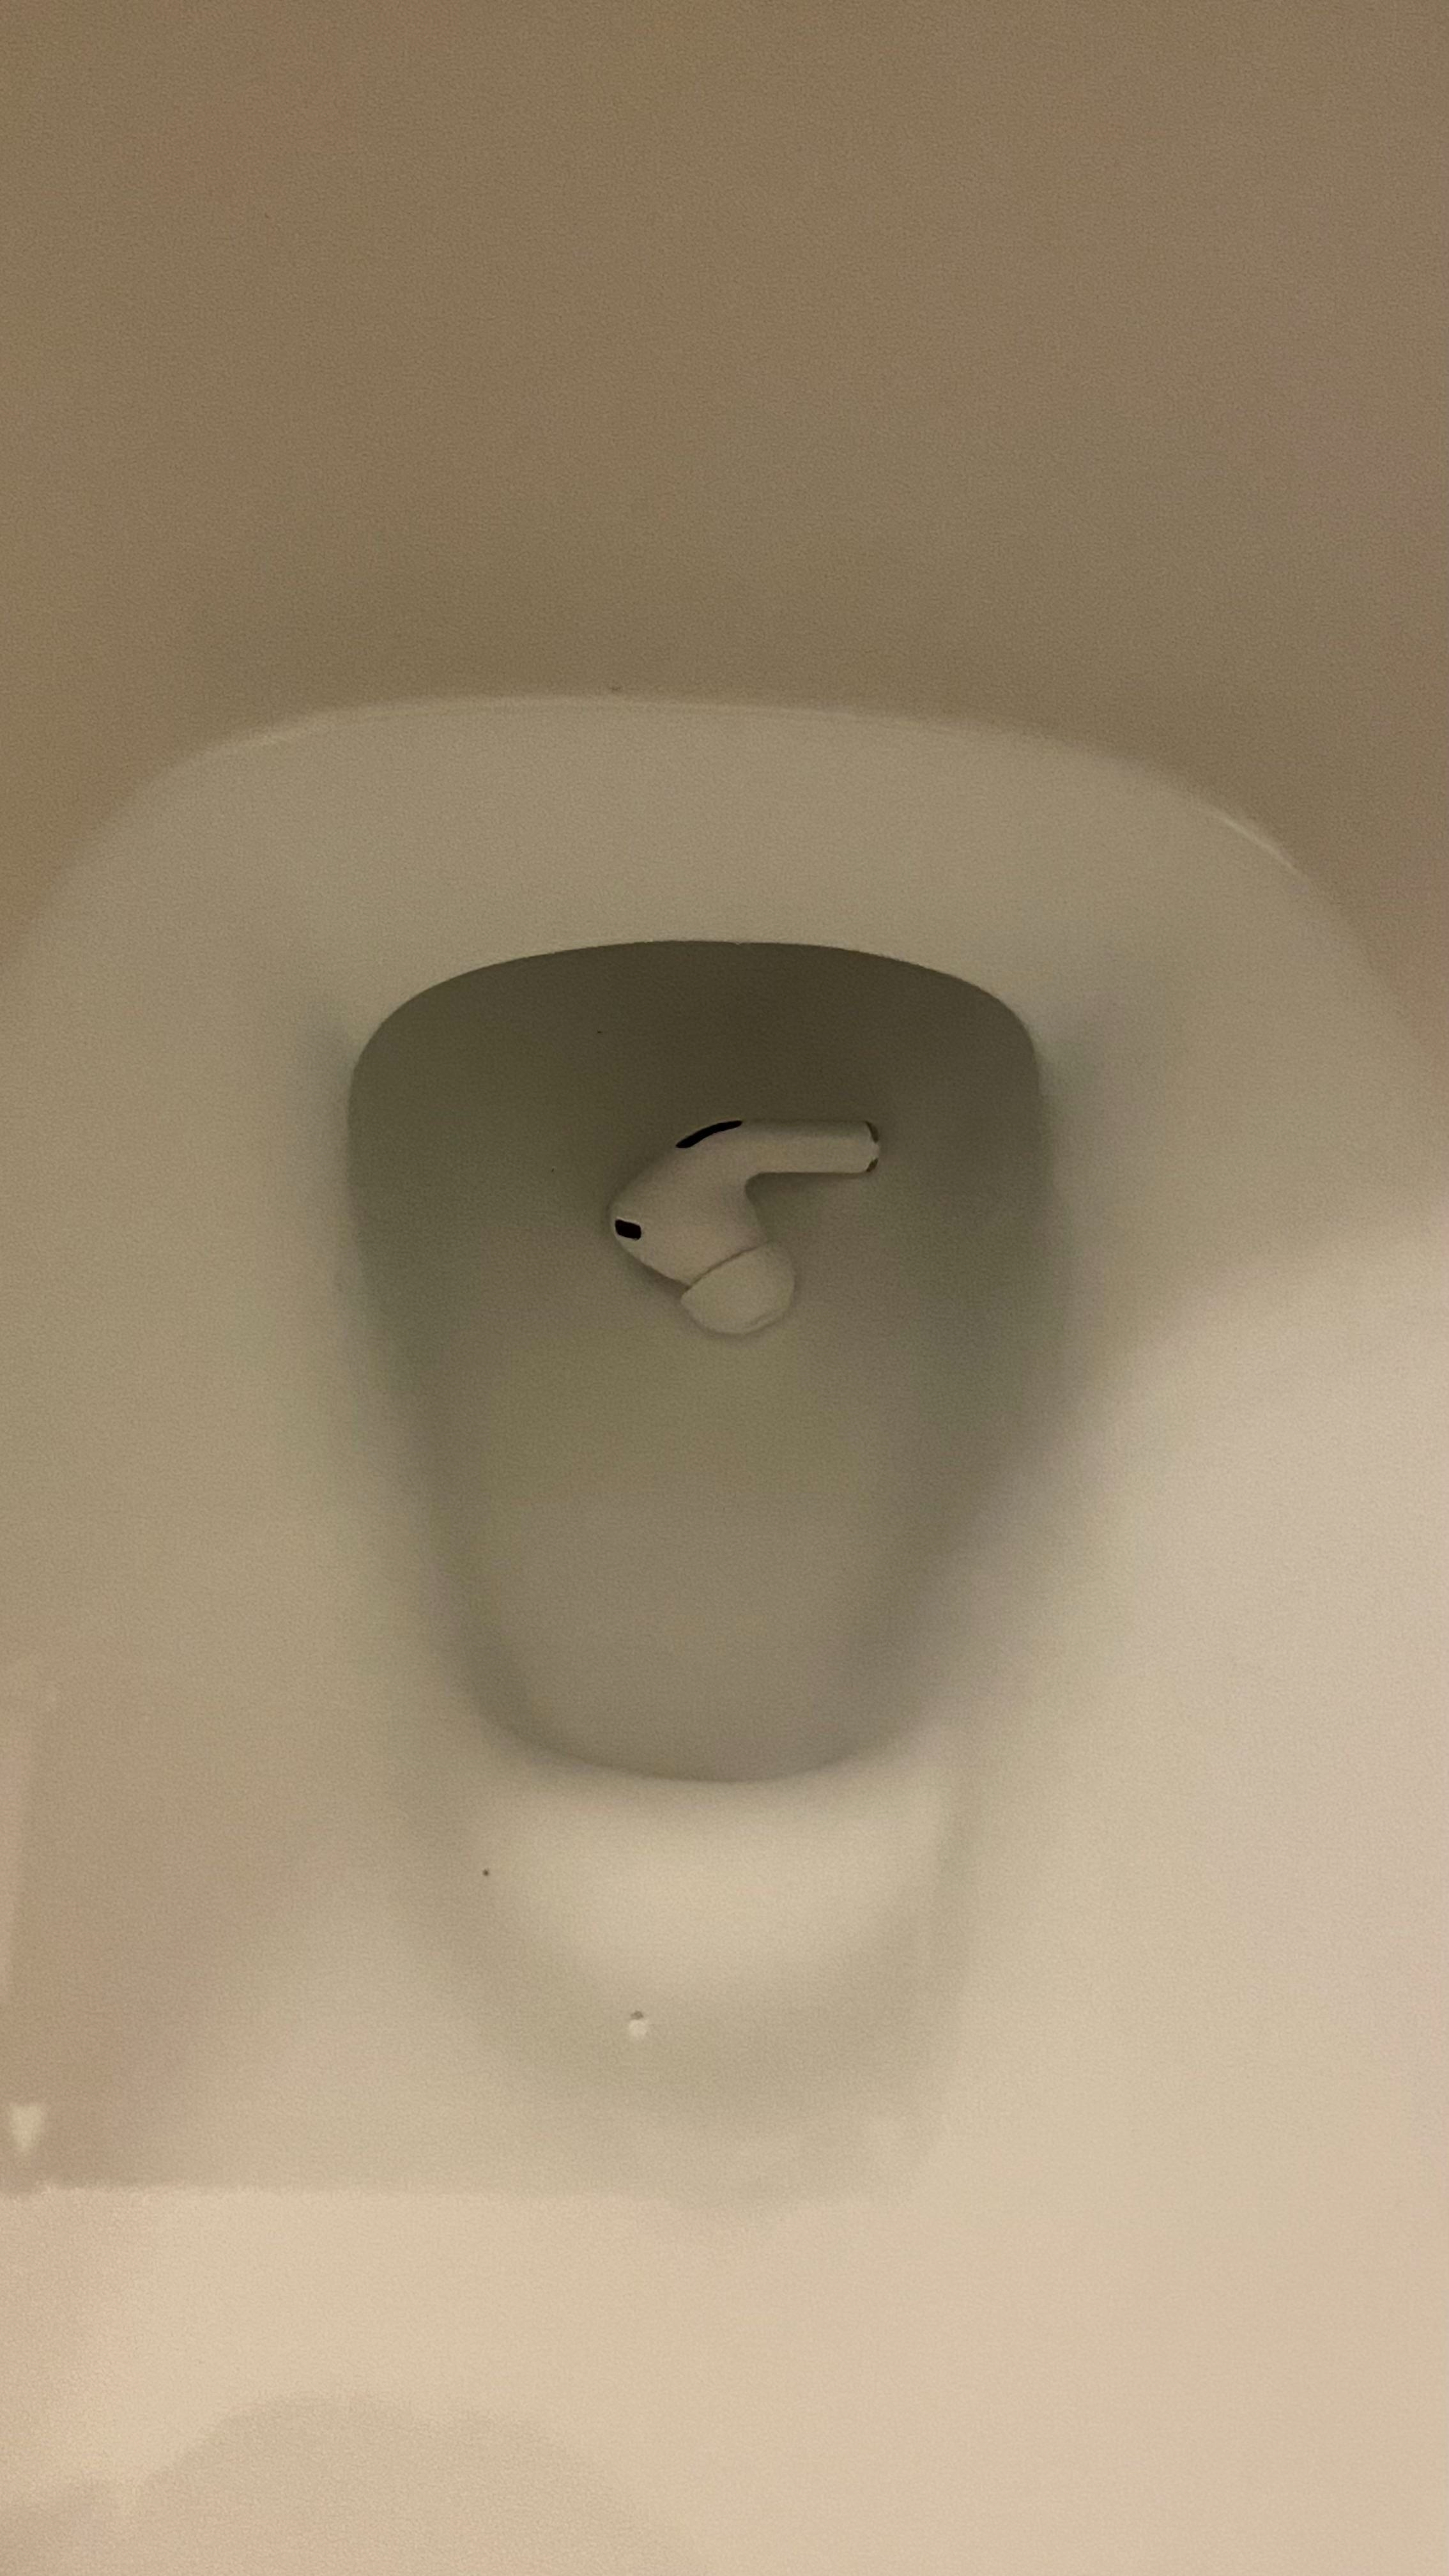 An AirPod in a toilet